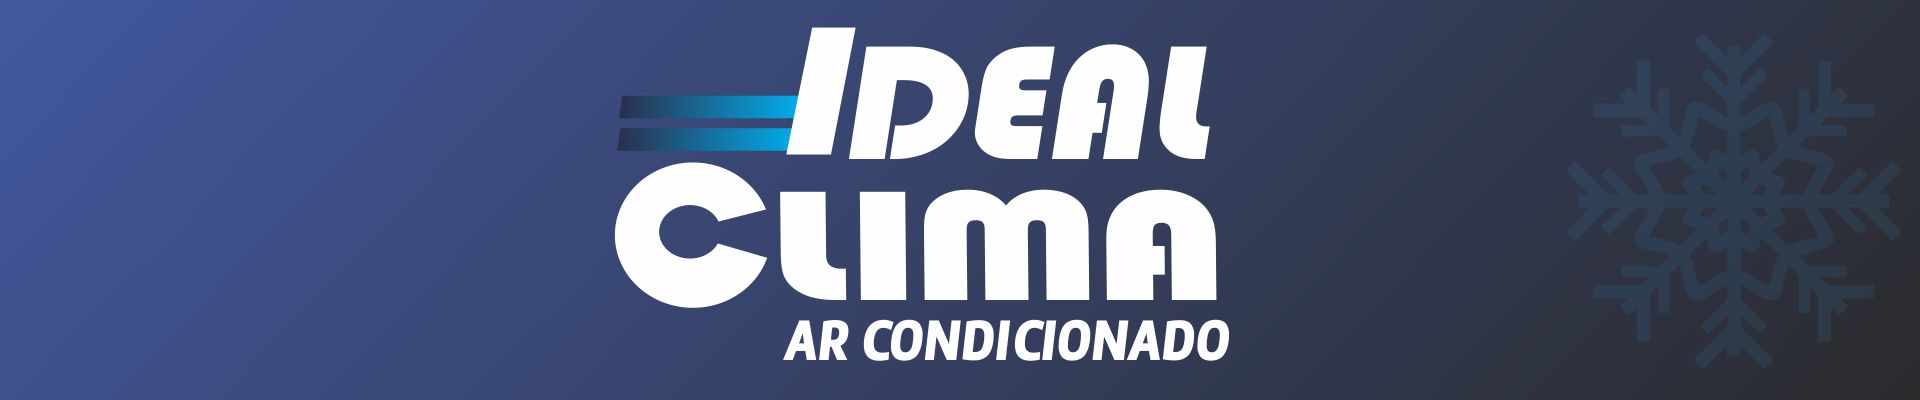 Ideal Clima - Ar Condicionado